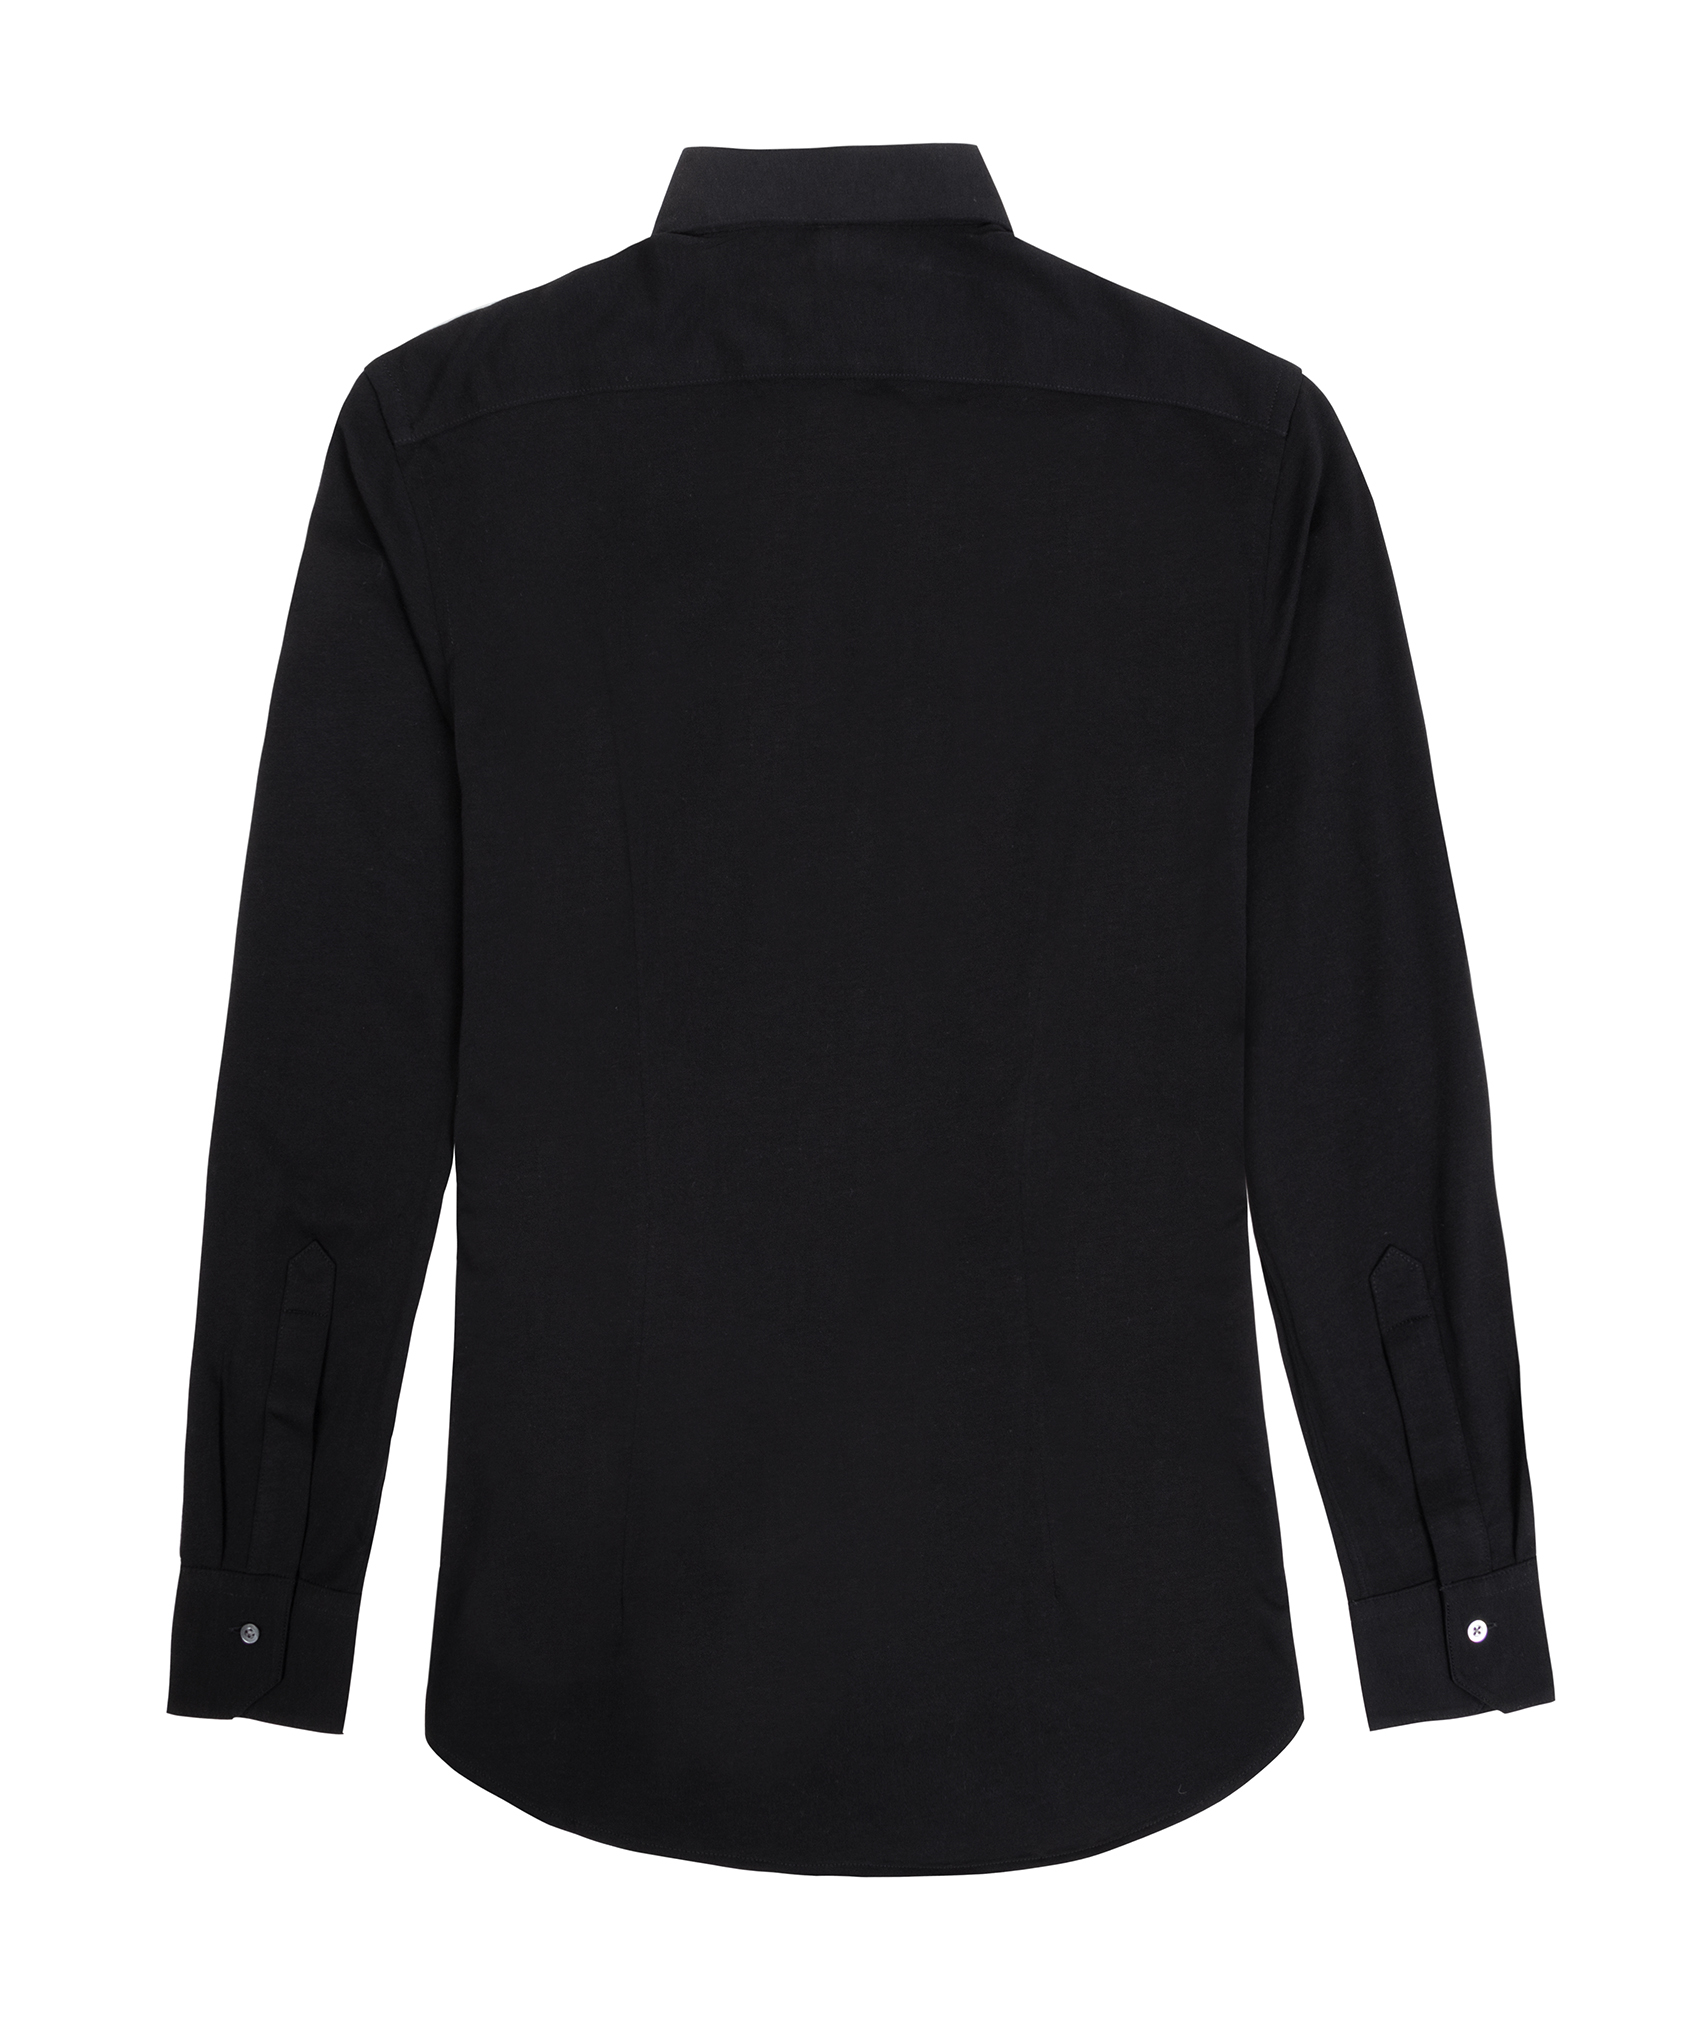 ITC Italian Cut Jersey Knit Shirt – Black - Knit Shirt Co.